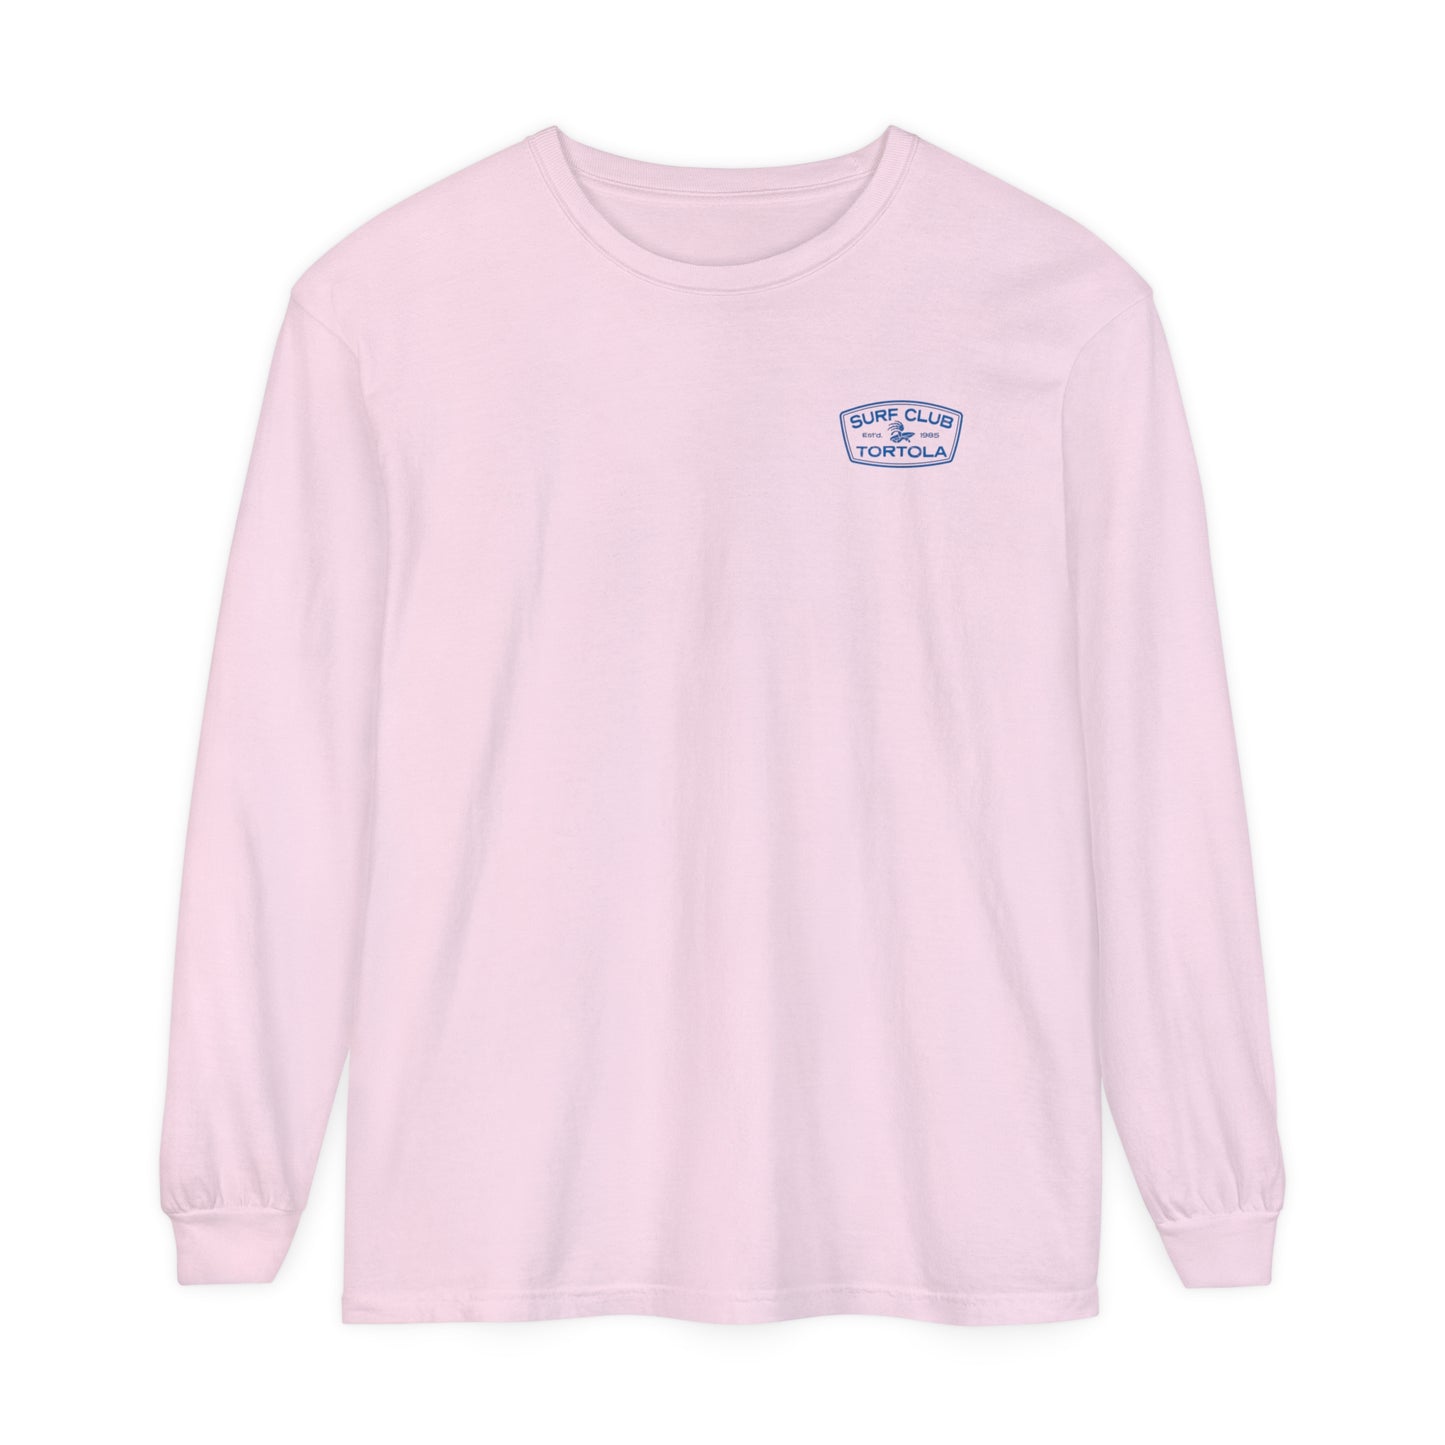 "Surf Club Tortola" Unisex L/S Garment-Dyed T-Shirt